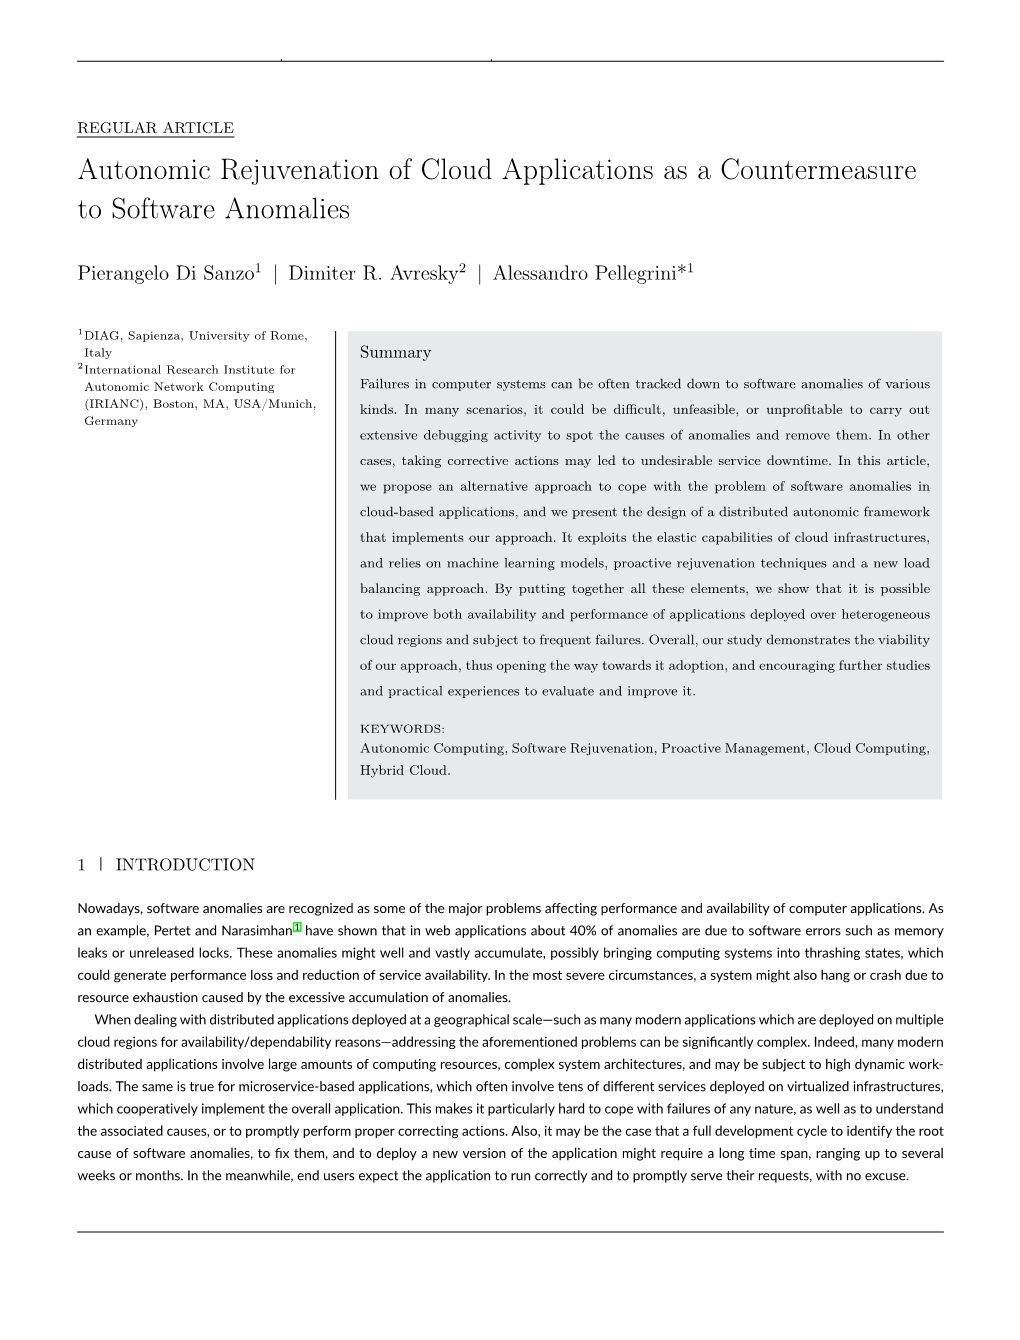 Autonomic Rejuvenation of Cloud Applications As a Countermeasure to Software Anomalies